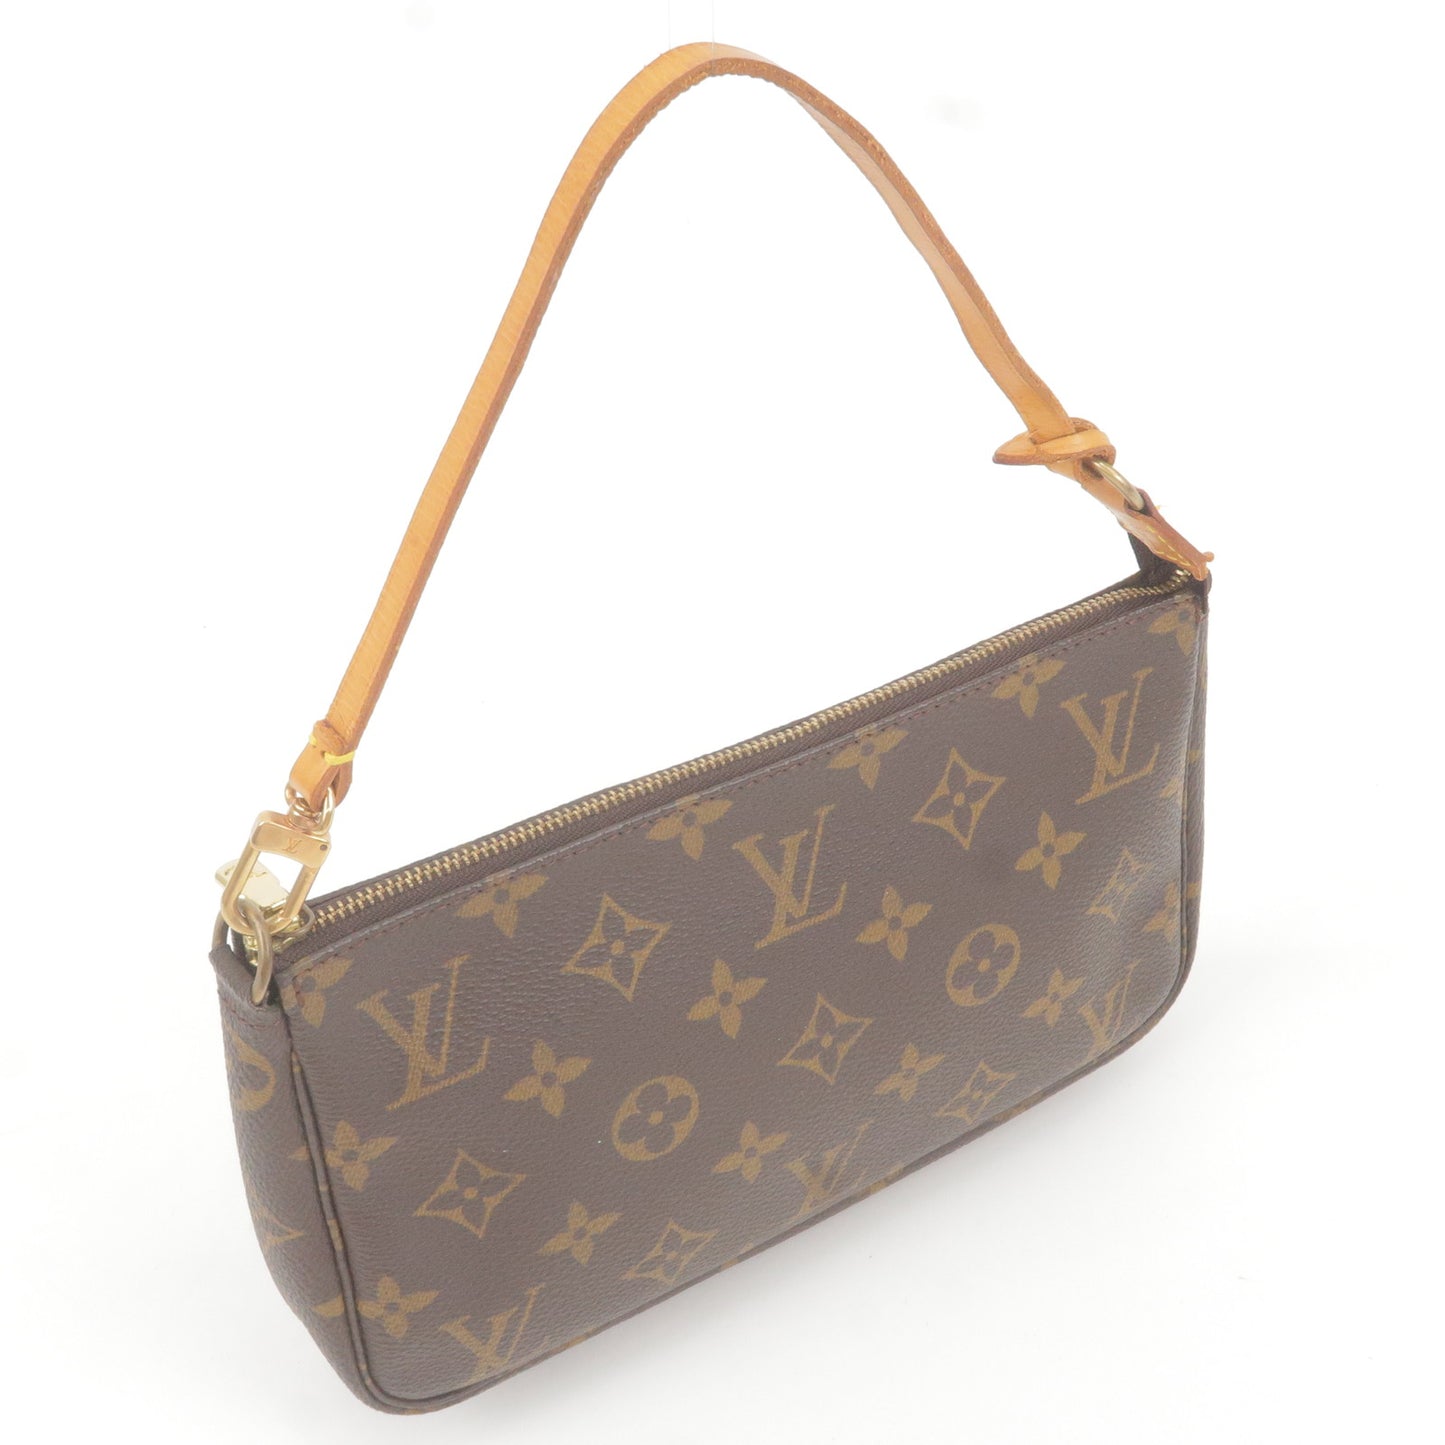 Selena Gomez Style. - Louis Vuitton Lumineuse PM Handbag.